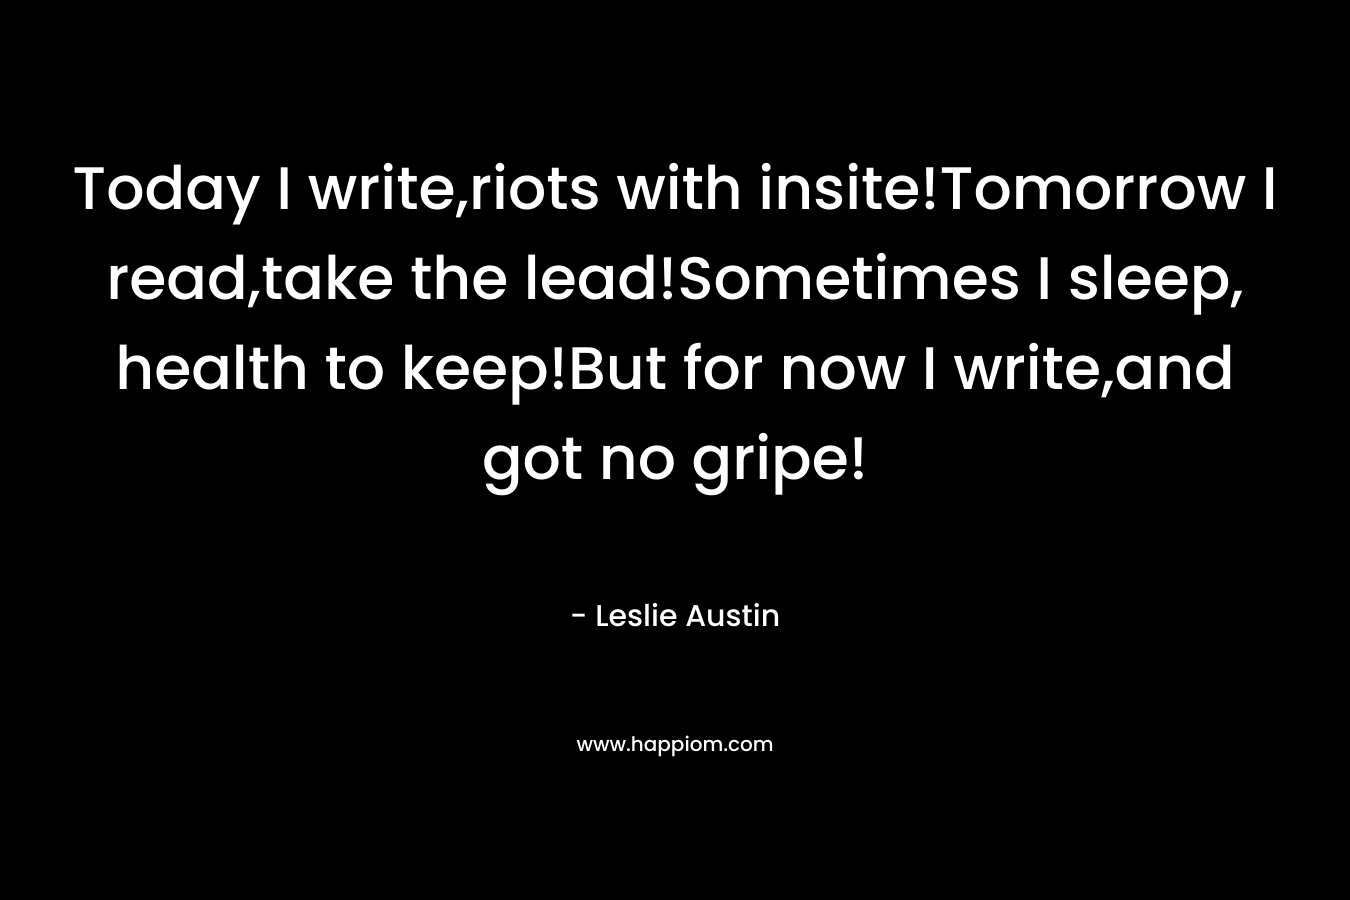 Today I write,riots with insite!Tomorrow I read,take the lead!Sometimes I sleep, health to keep!But for now I write,and got no gripe!